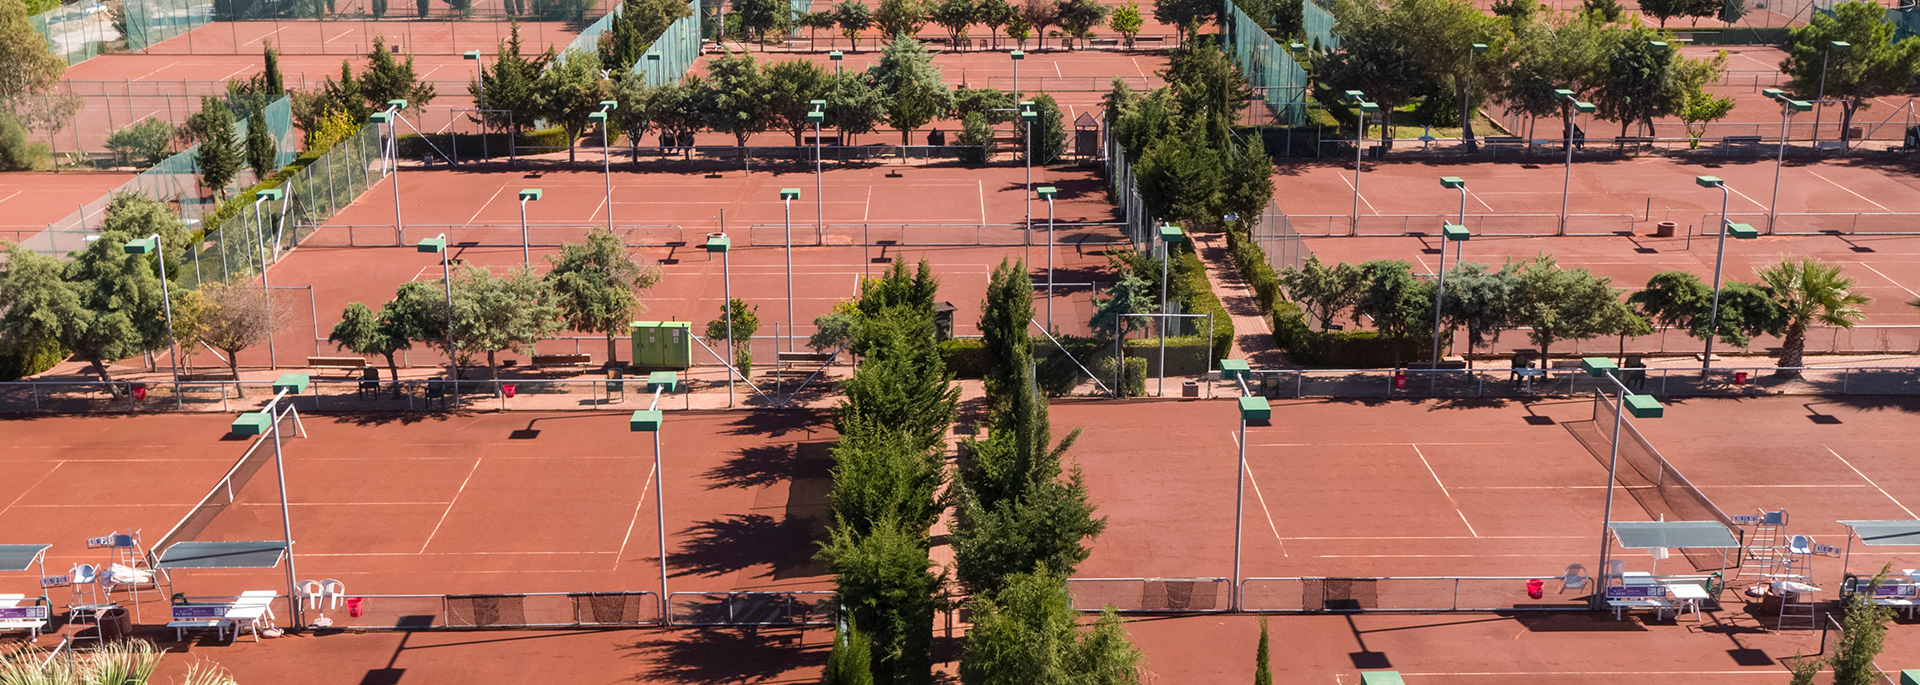 Tenis - Ali Bey Park Manavgat - Side, Antalya, Türkiye